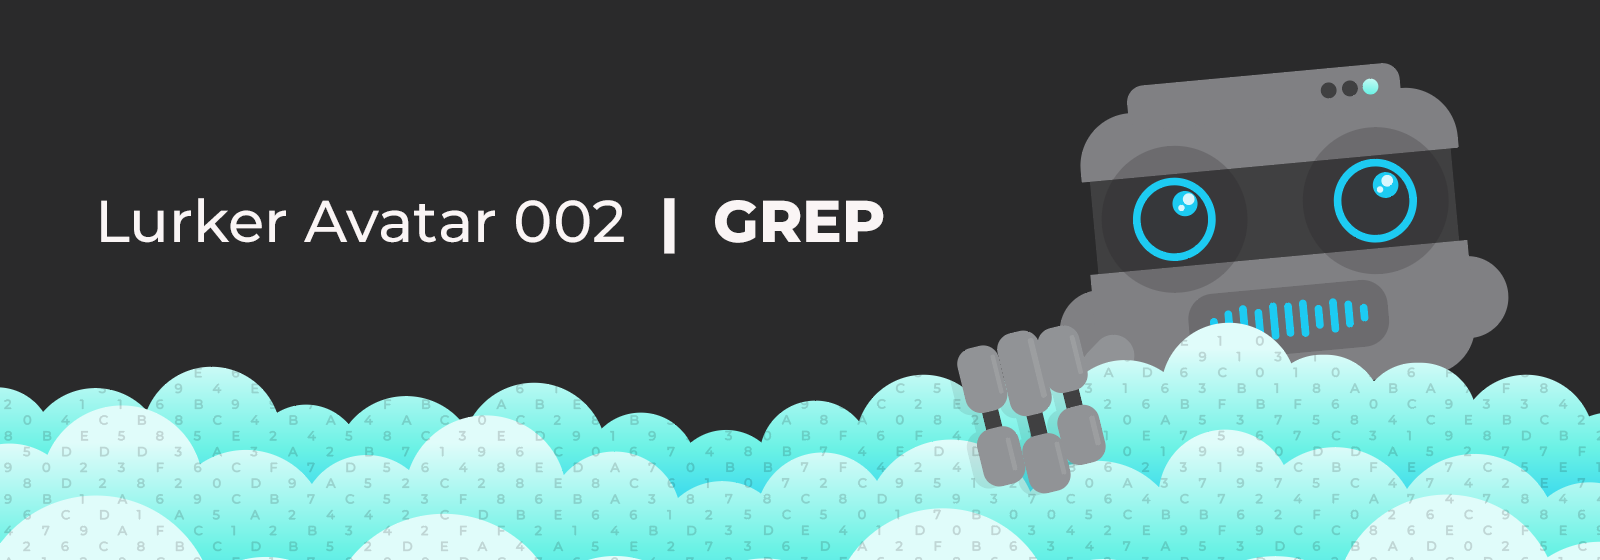 Meet GREP